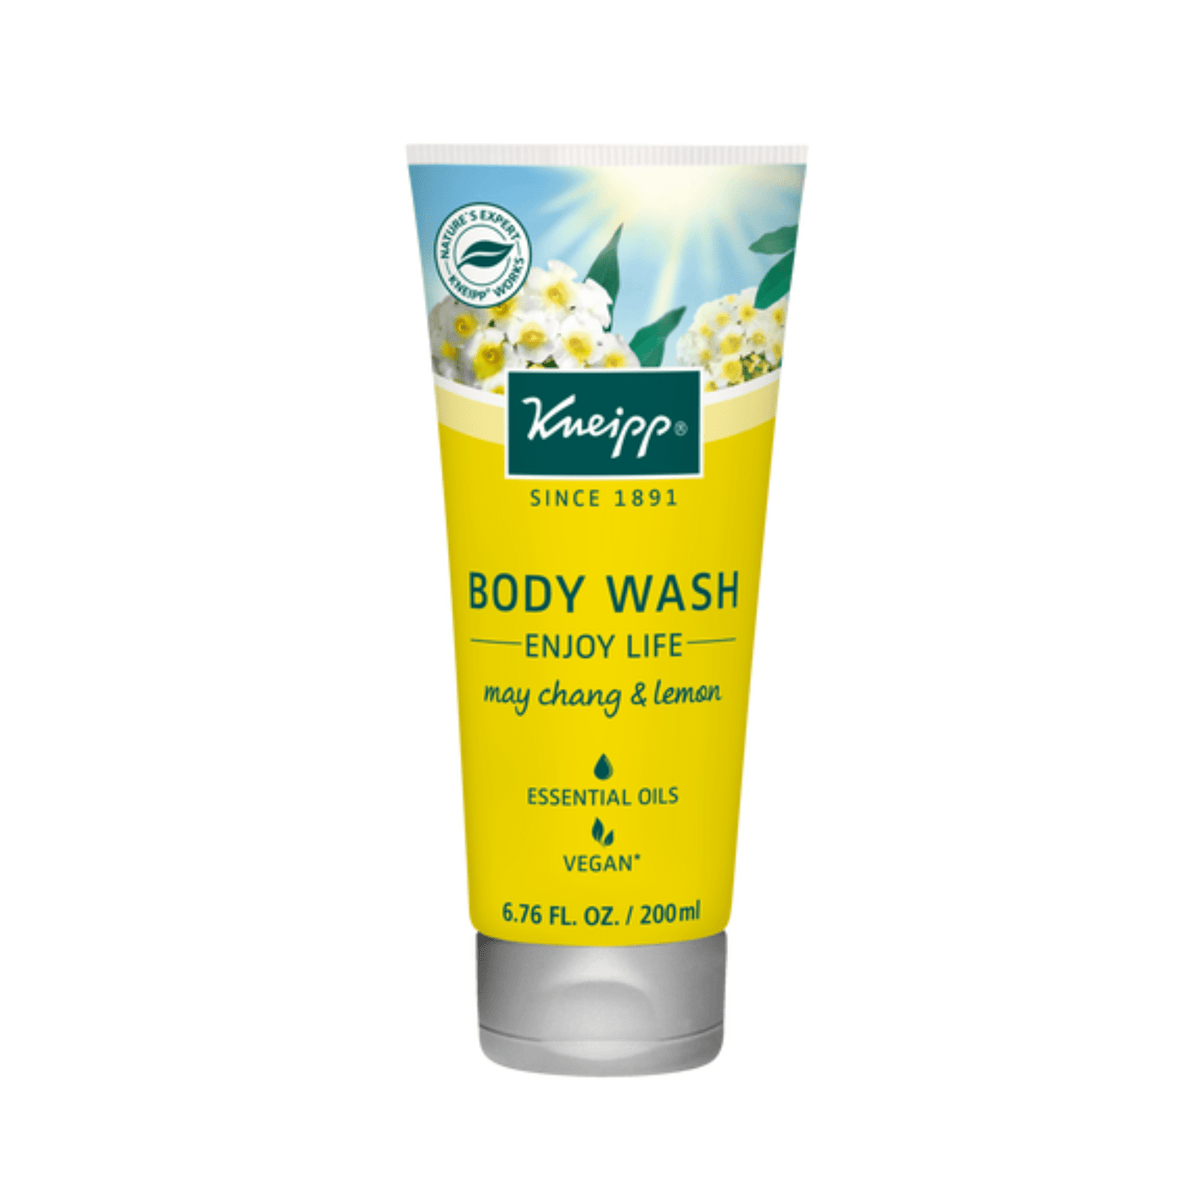 Primary Image of May Chang & Lemon Enjoy Life Body Wash